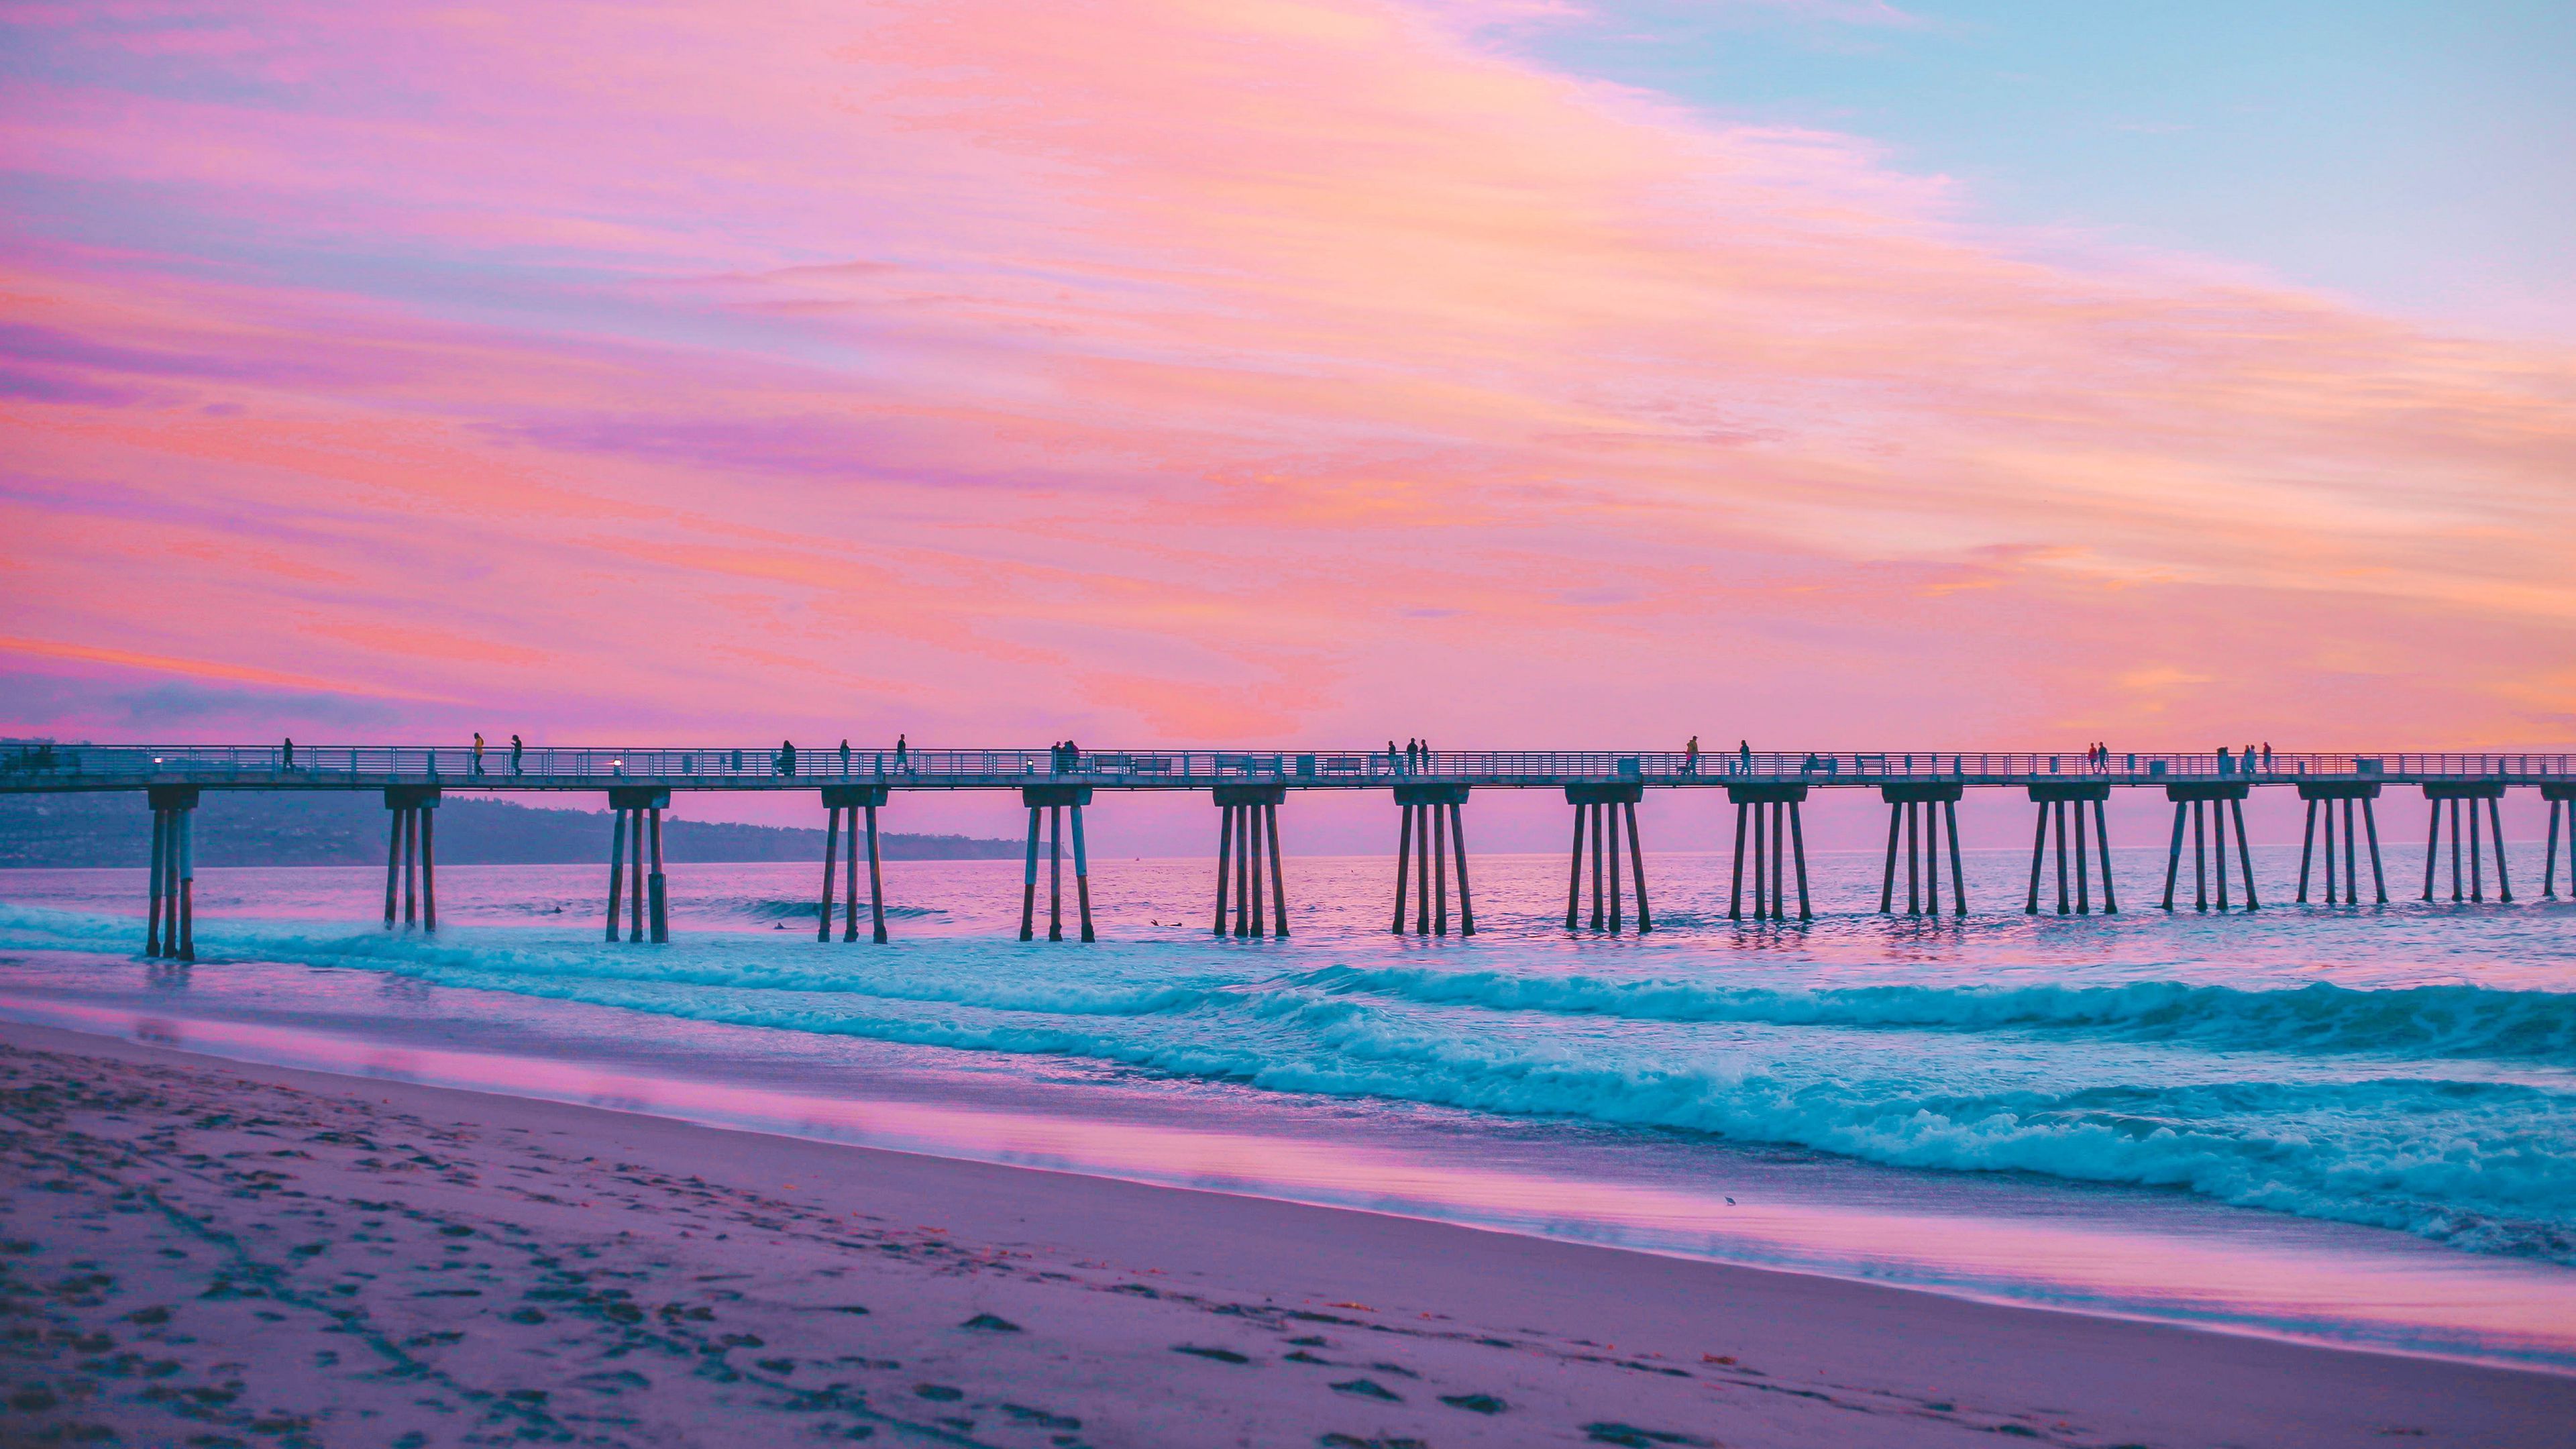 Wallpaper / pier, sea, surf, pink, hermosa beach, california, 4k free download